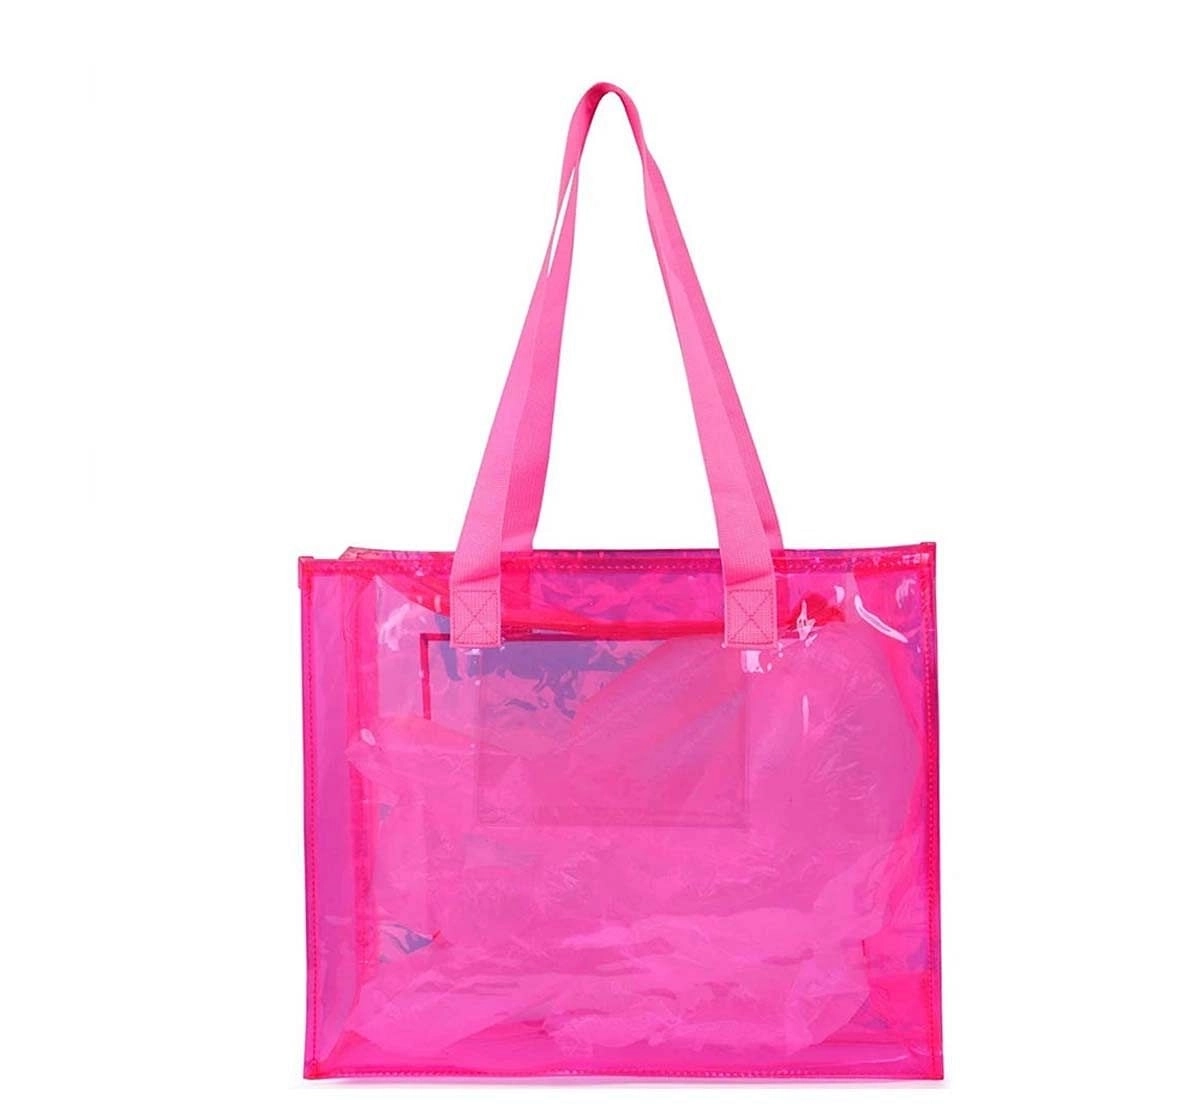 Hamster London Tote Bag Pink Travel for Kids Age 3Y+ (Pink)